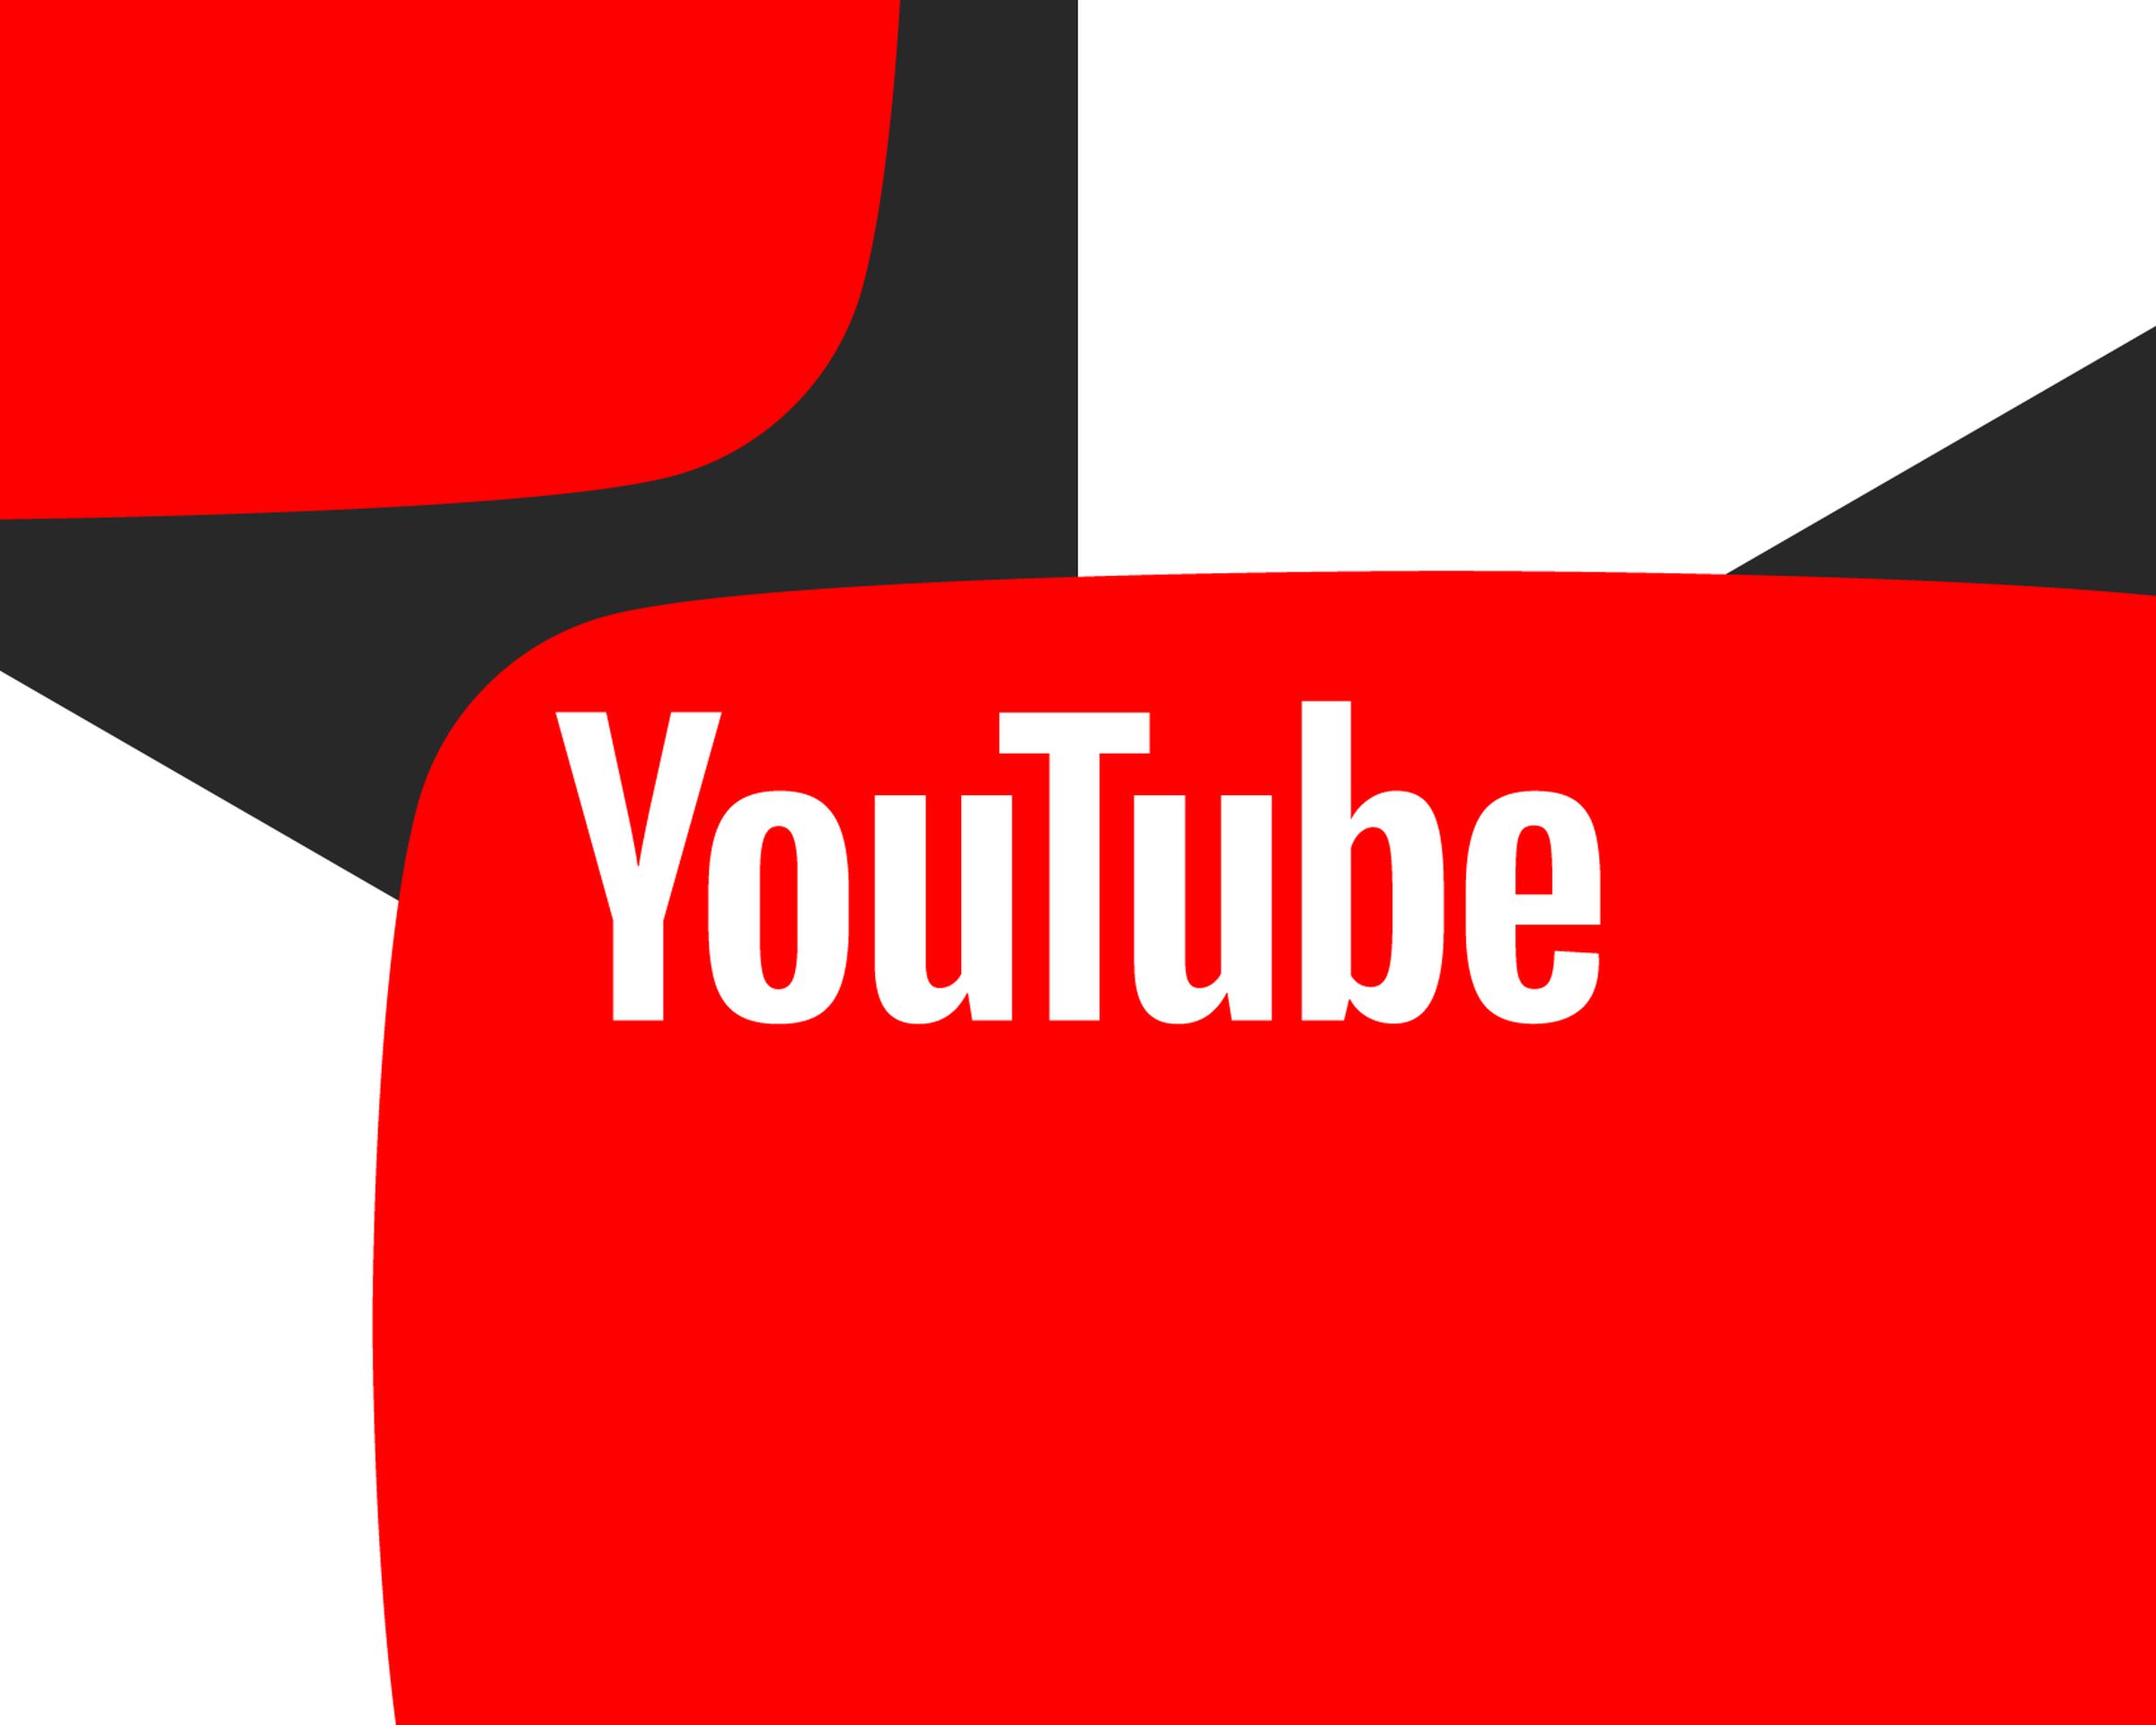 Illustration of a YouTube logo with geometric background